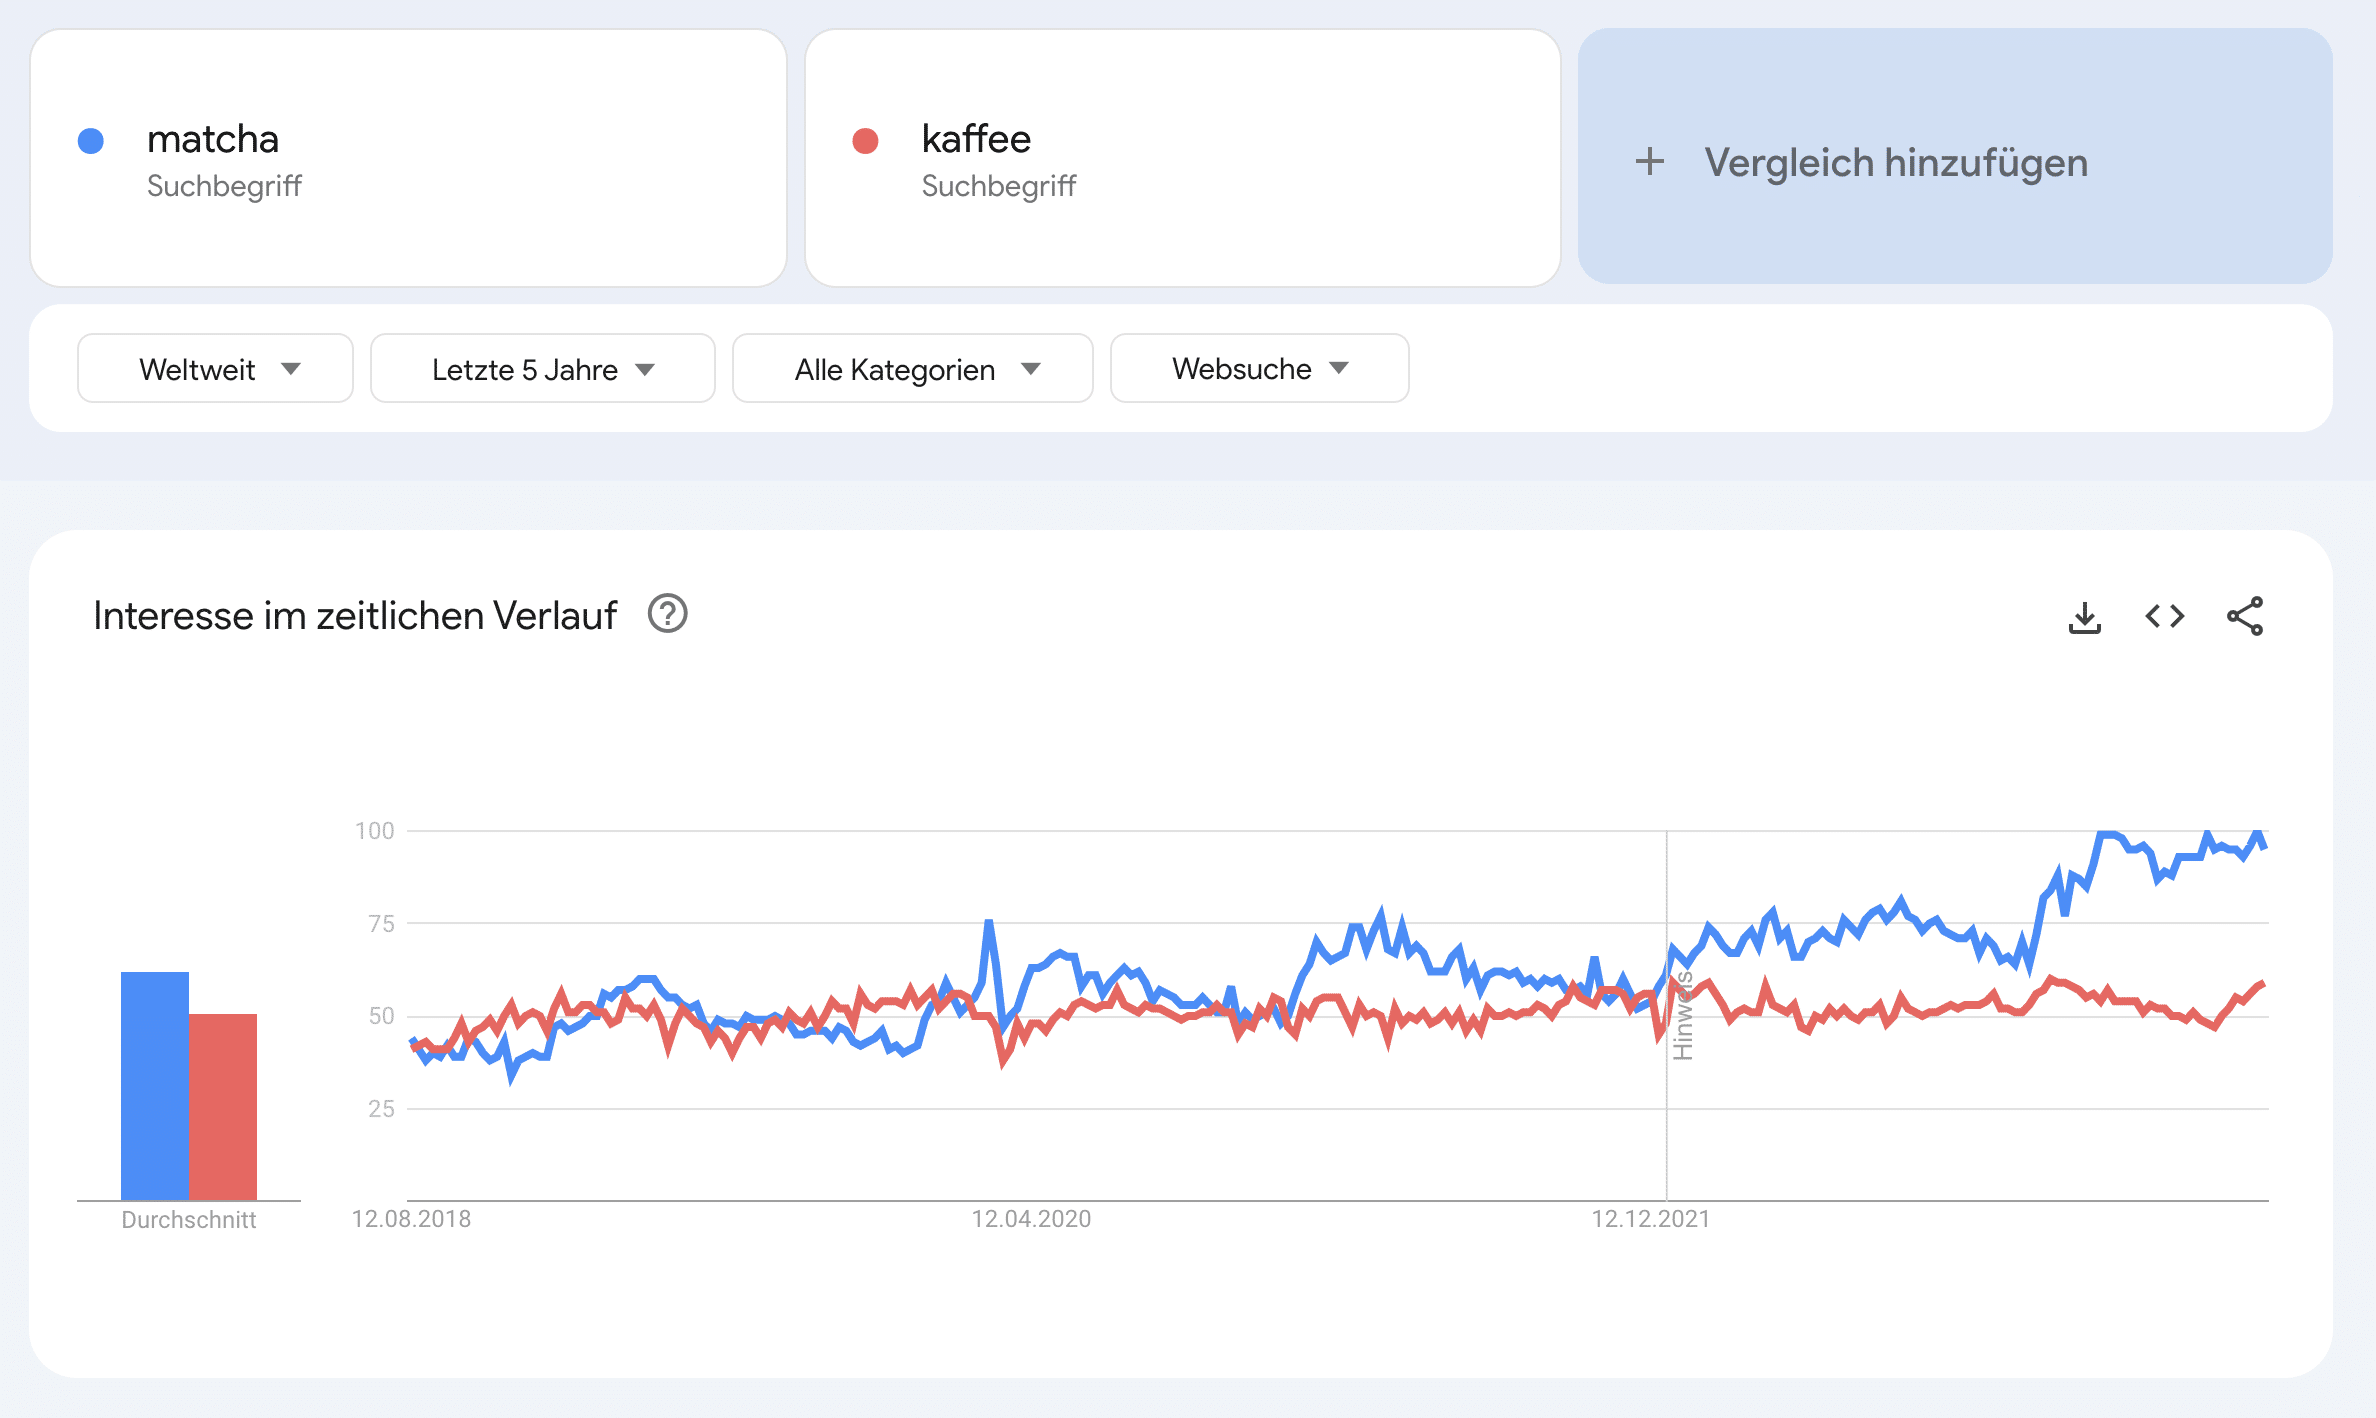 KeyworKeywordrecherche Google Trends Beispiel Matcha vs. Kaffeedrecherche-Google-Trends-Beispiel-Matcha-vs-Kaffee